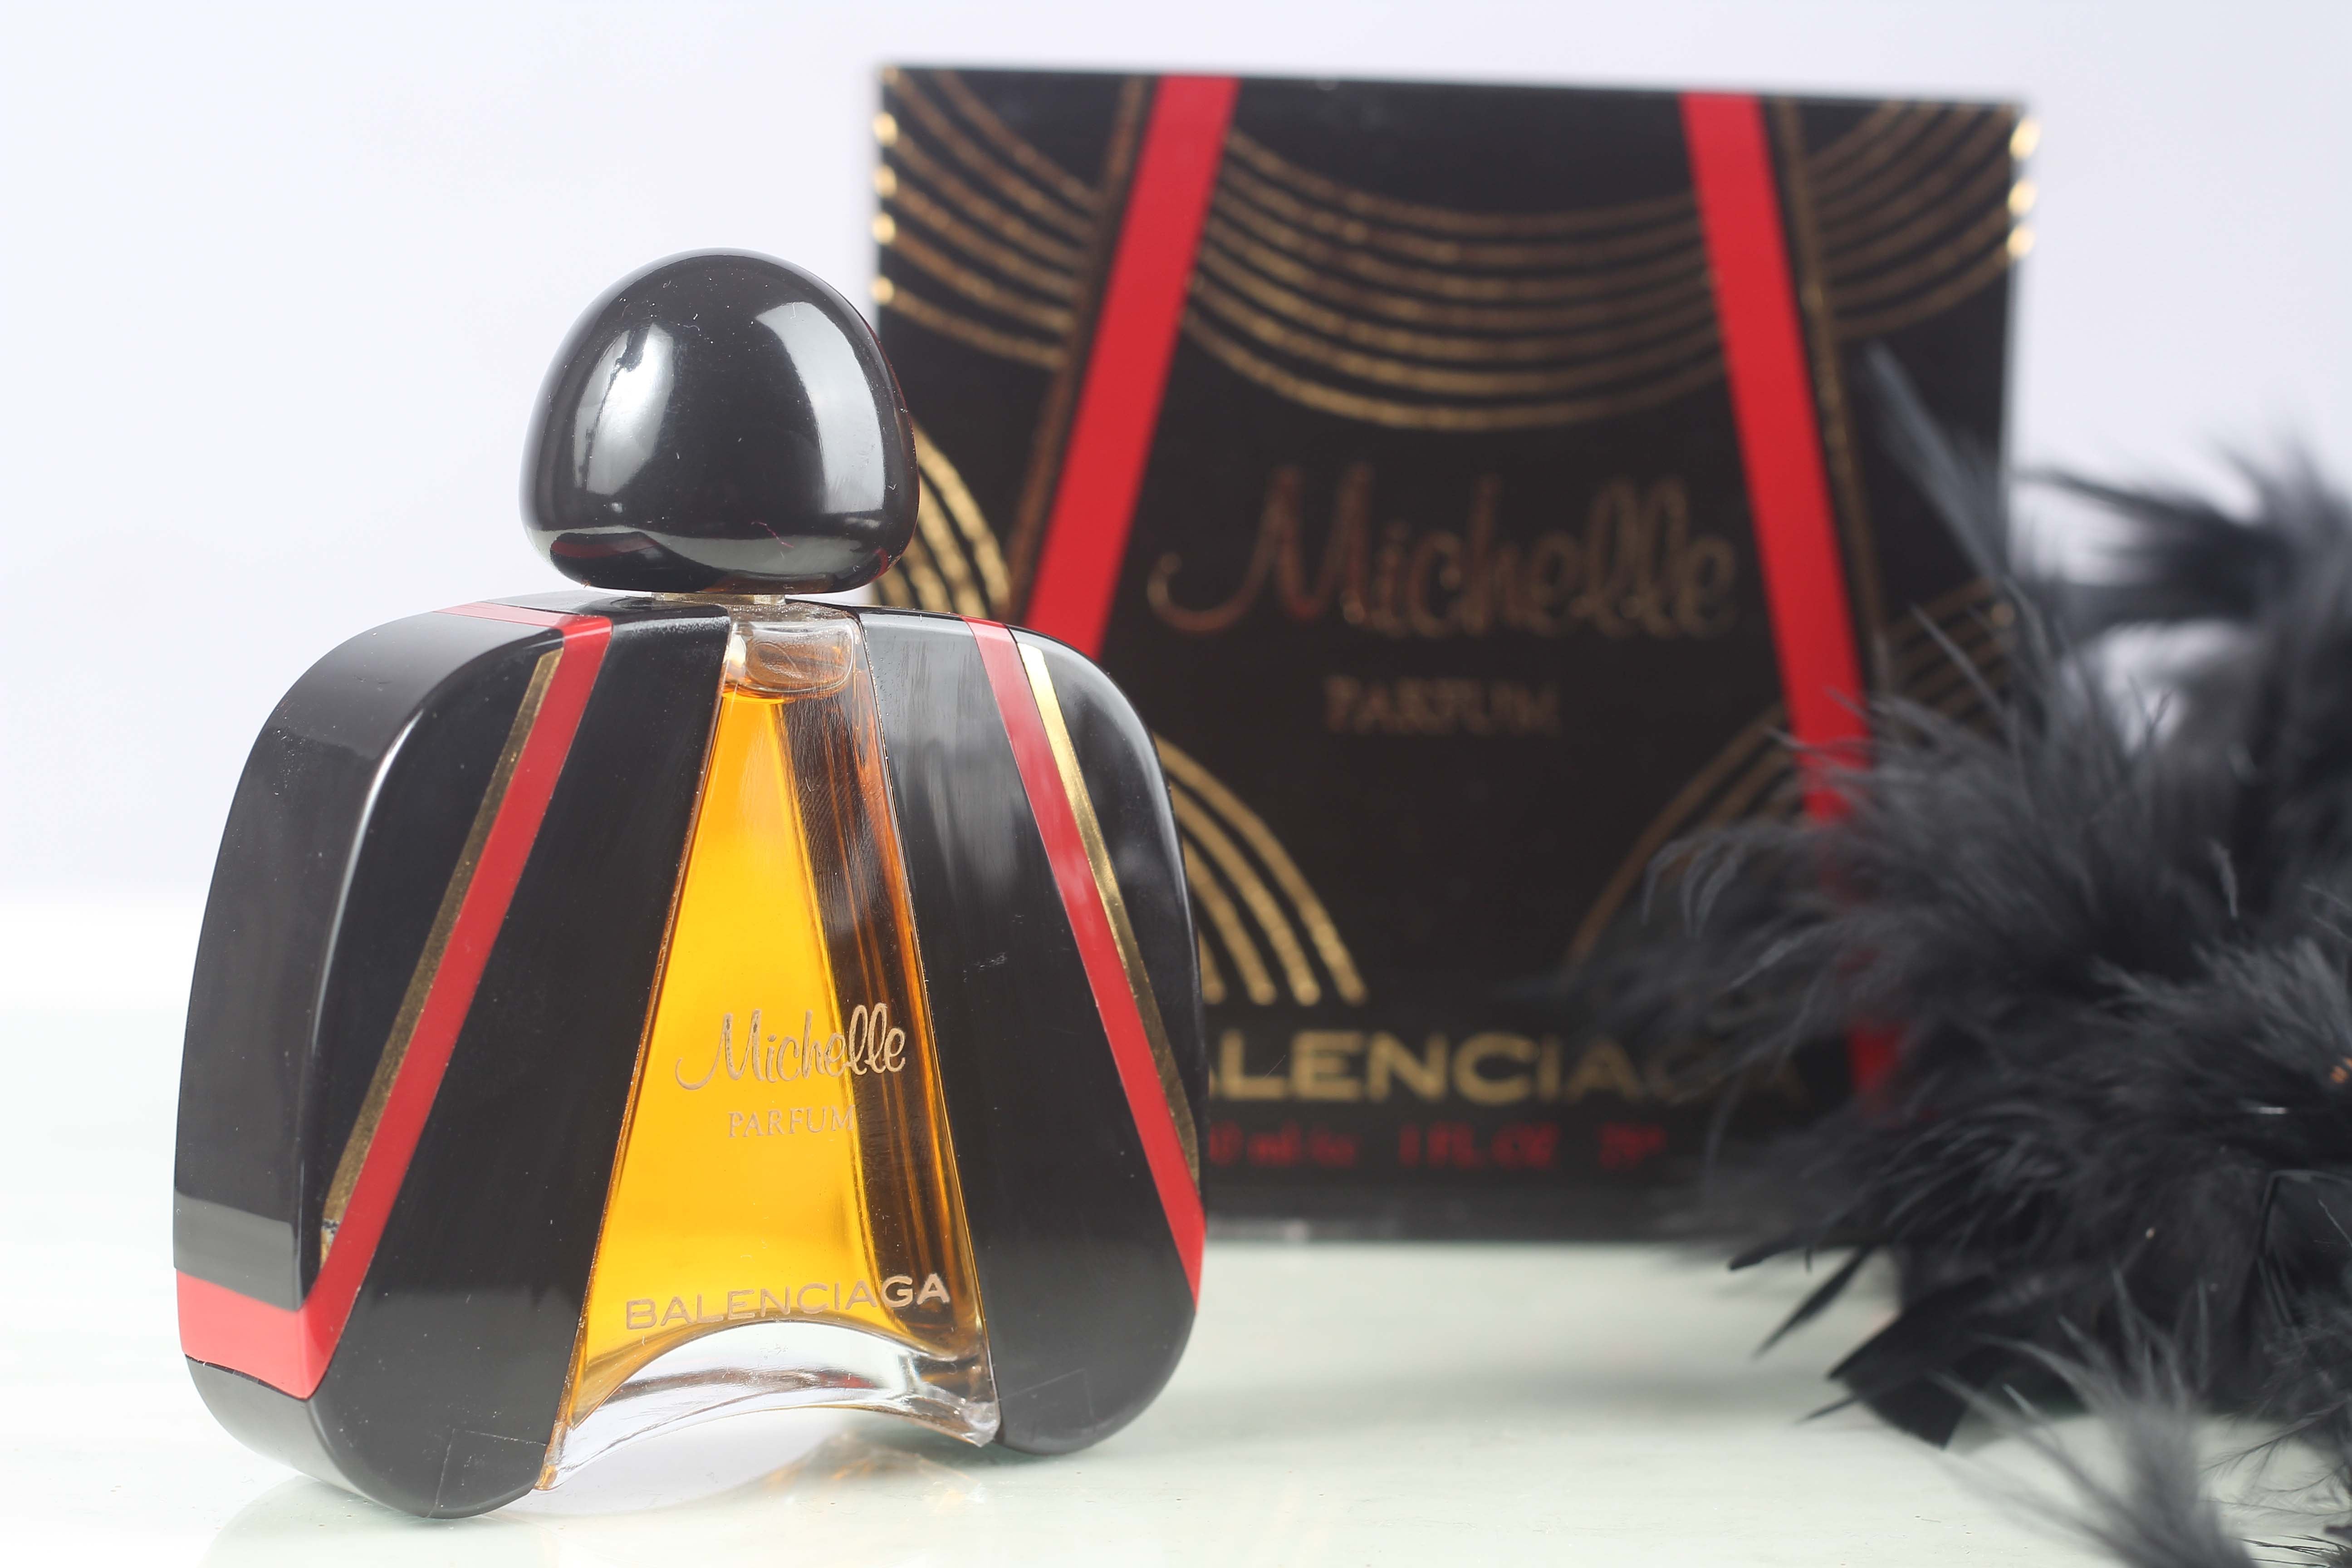 Michelle Balenciaga Parfum Splash 30 ml 1 oz, Vintage, Rare